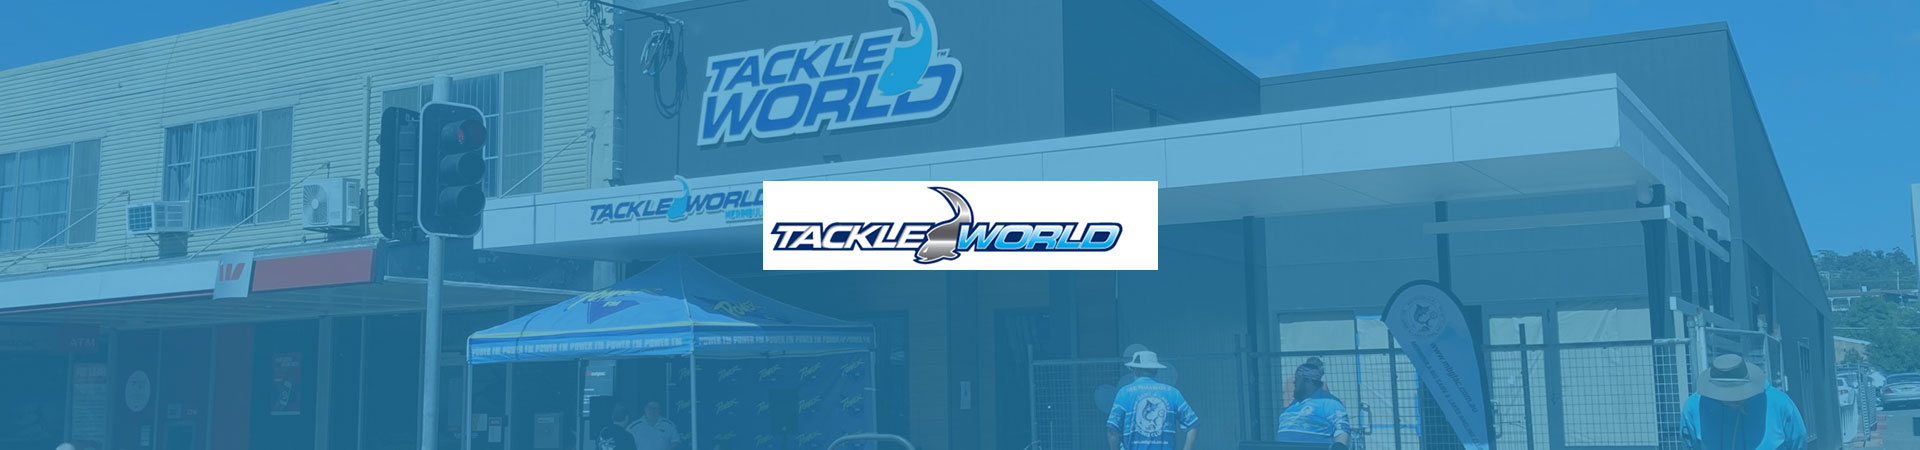 Tackle World Australia group